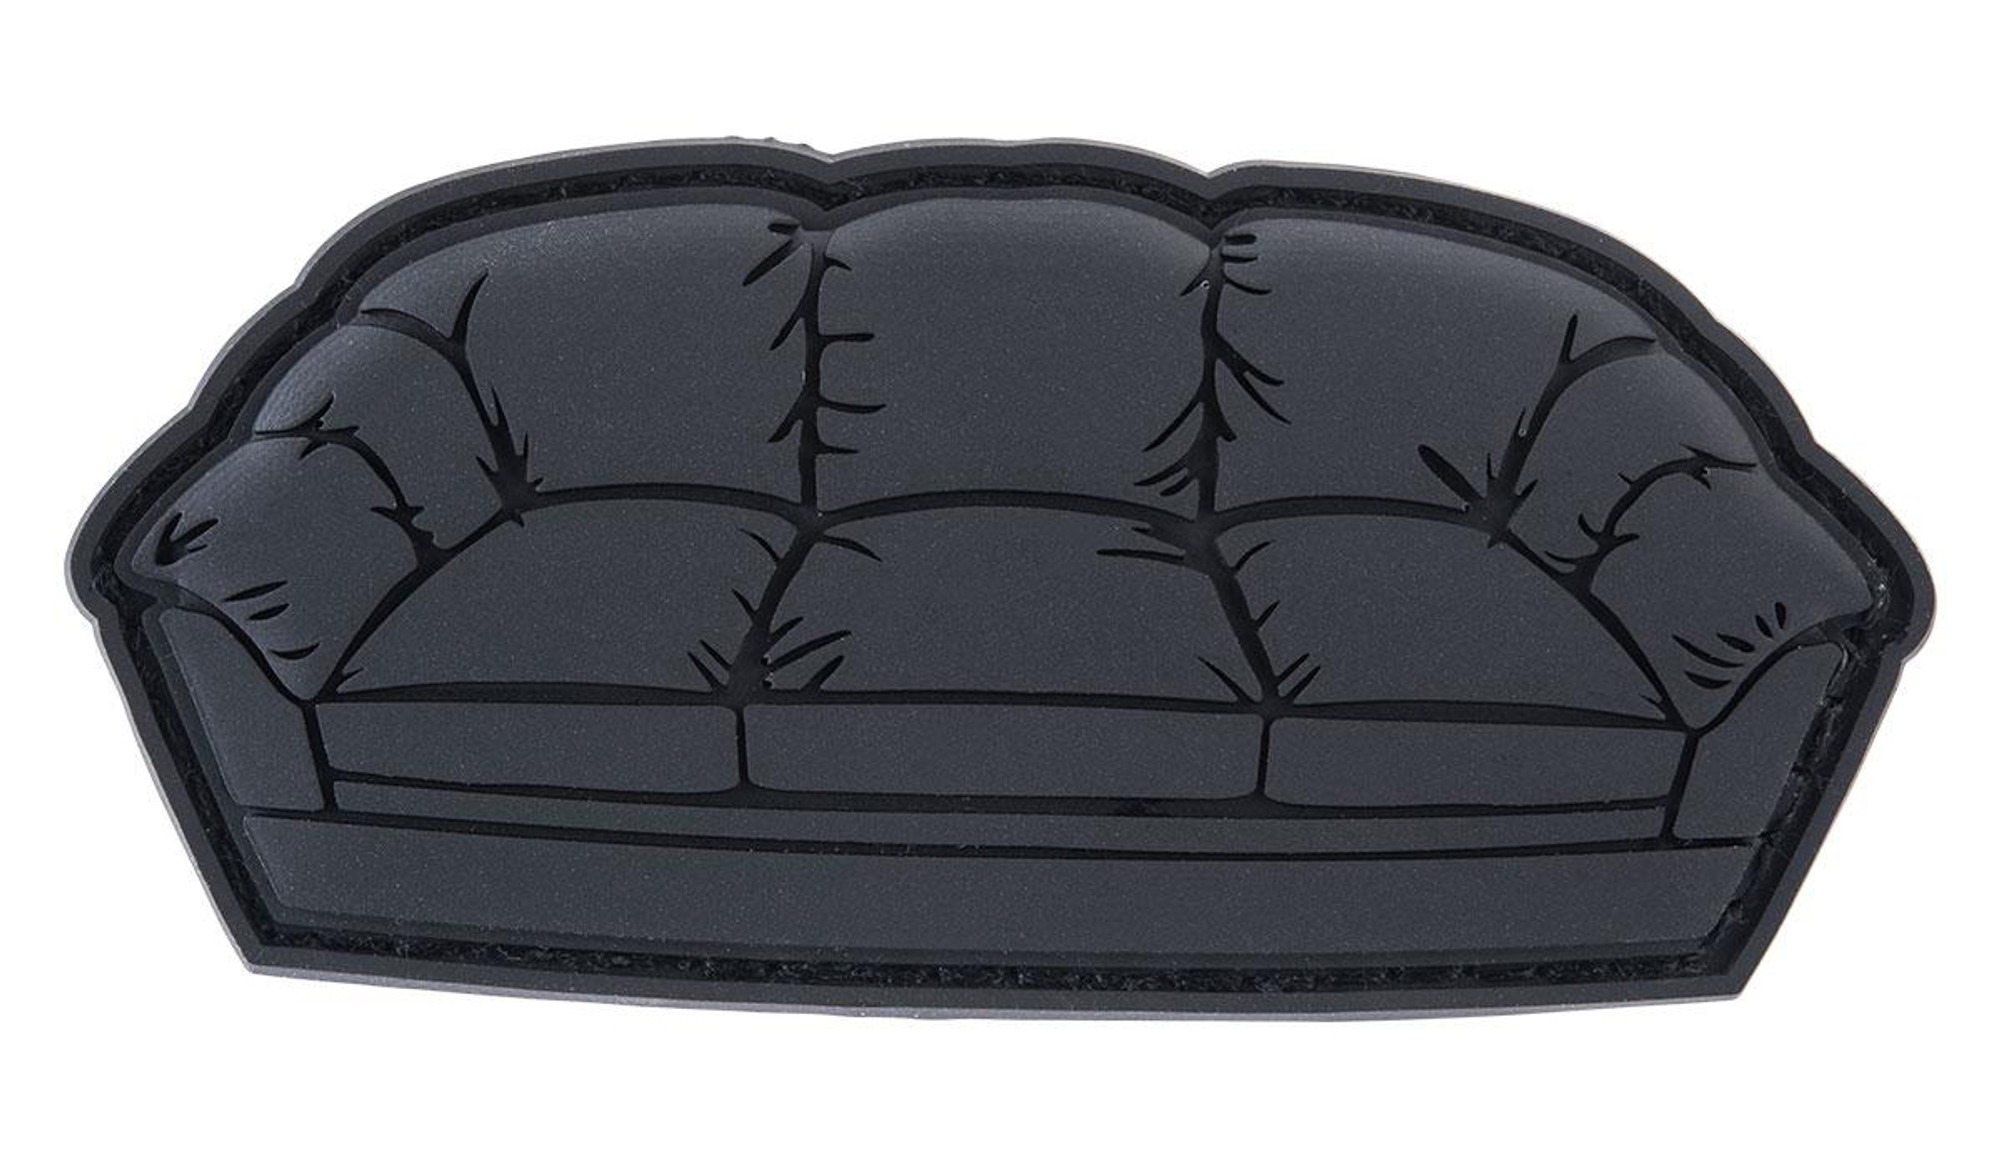 Aprilla Design "Couch" PVC Morale Patch